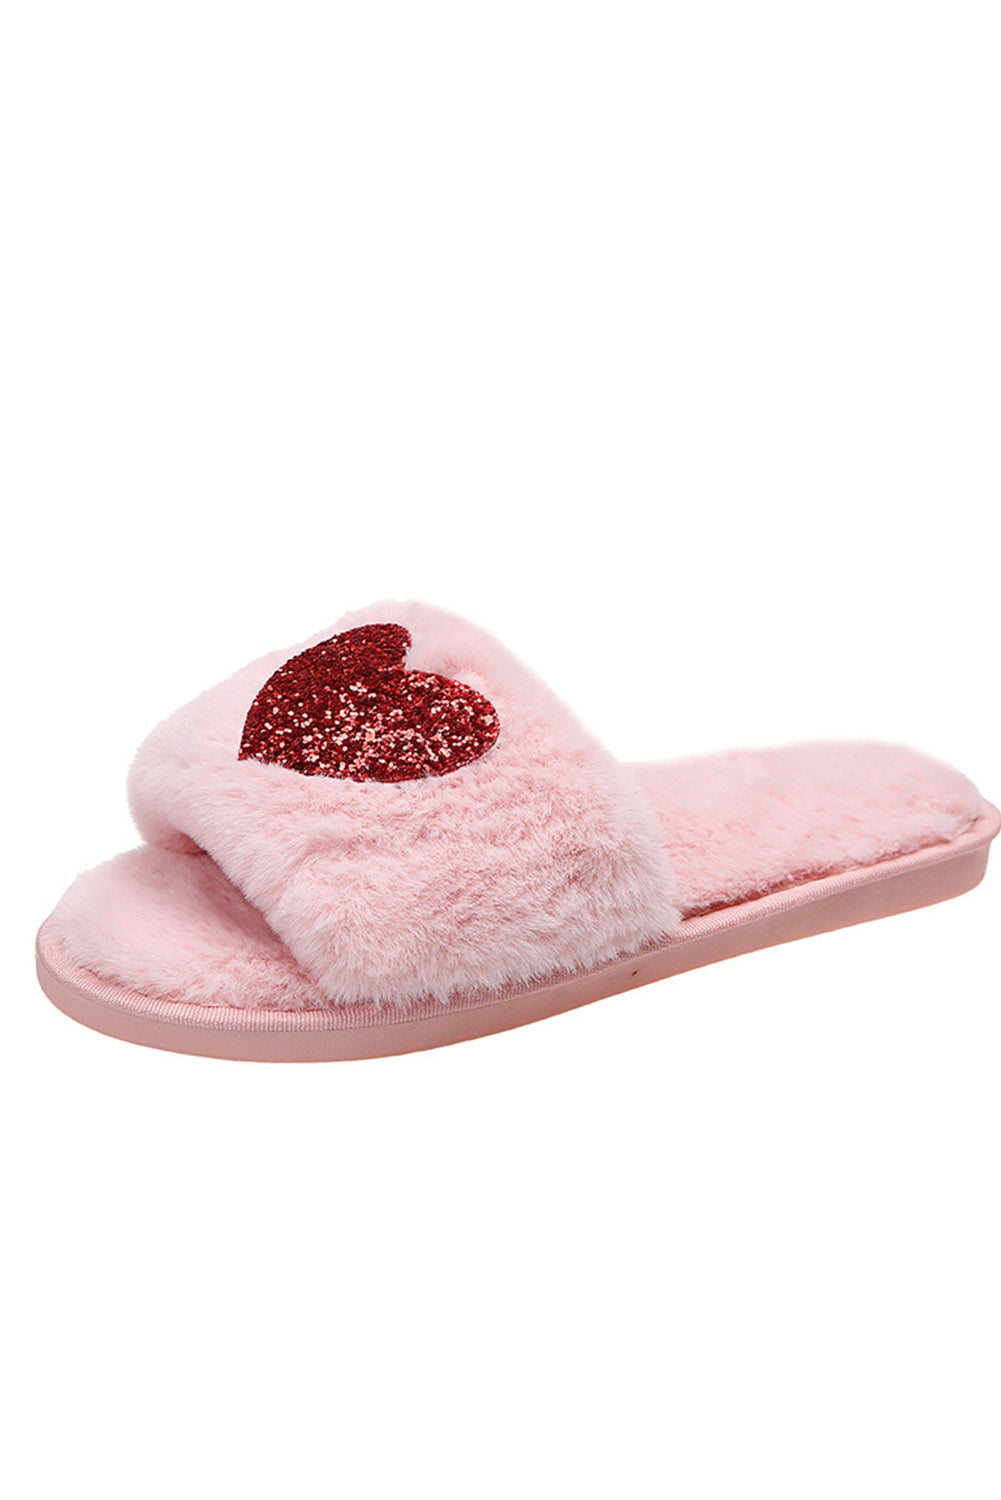 Pink Sequin Heart Shaped Slip On Plush Slippers Slippers JT's Designer Fashion